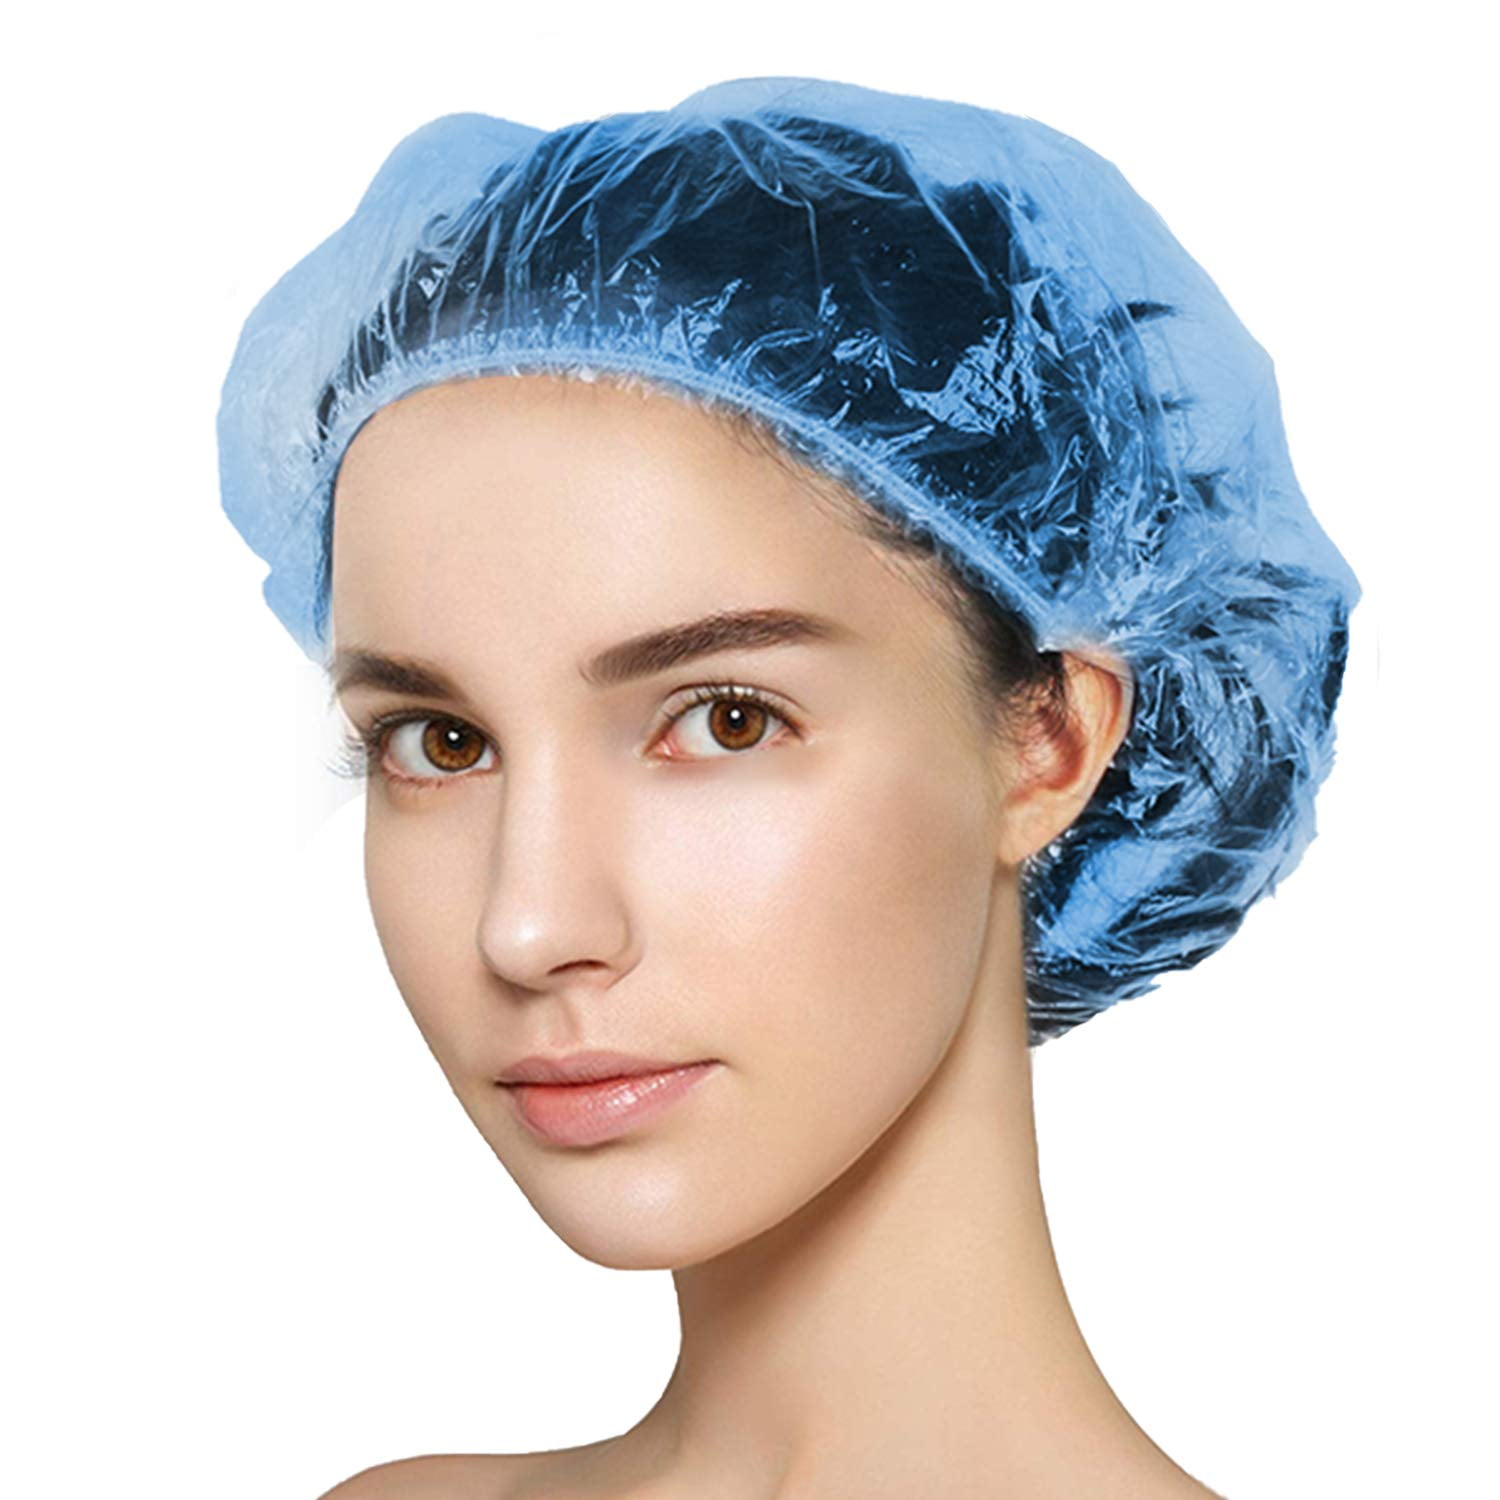 Scrub Cap//Surgical Hat//Medical Hair Cover